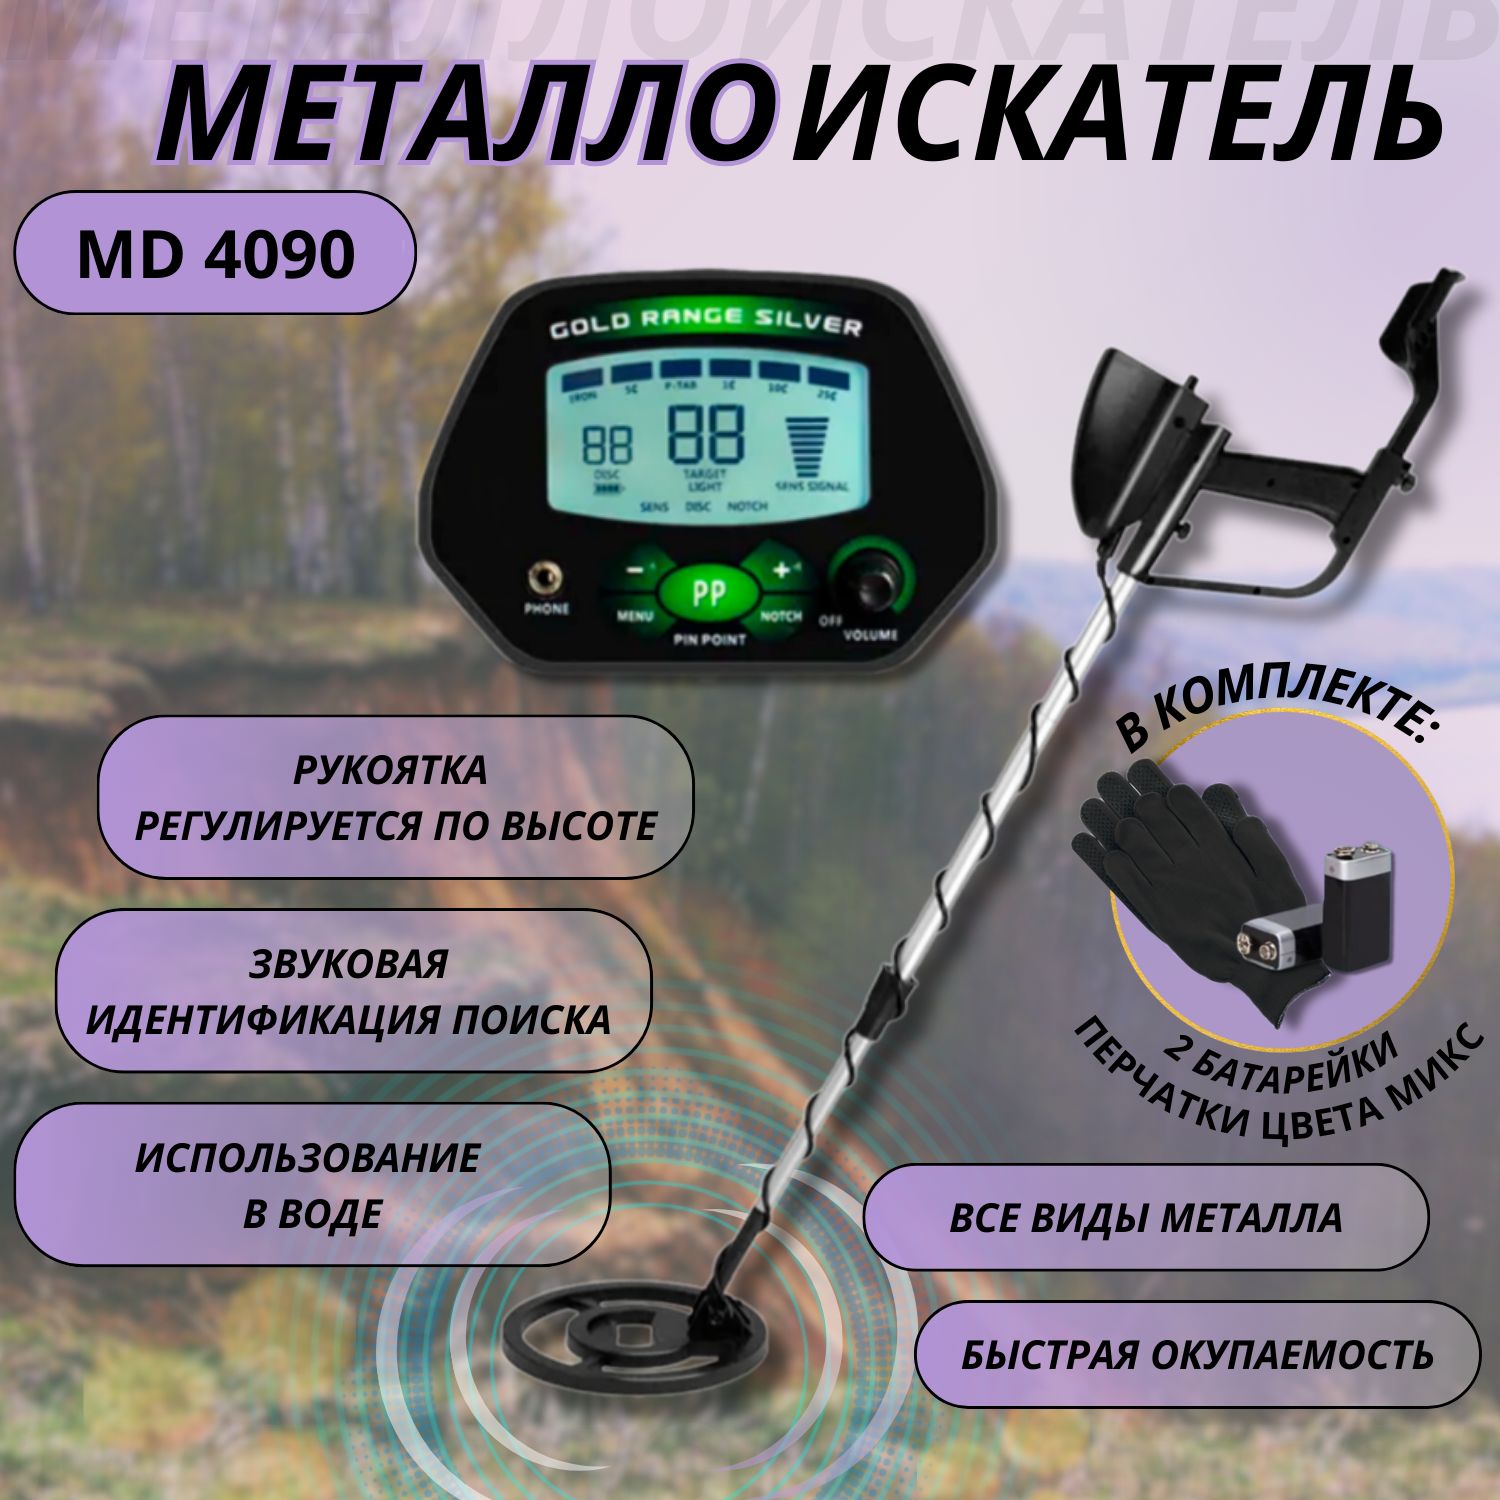 Продам металлоискатель Шанс и Clone Pi-W | luchistii-sudak.ru